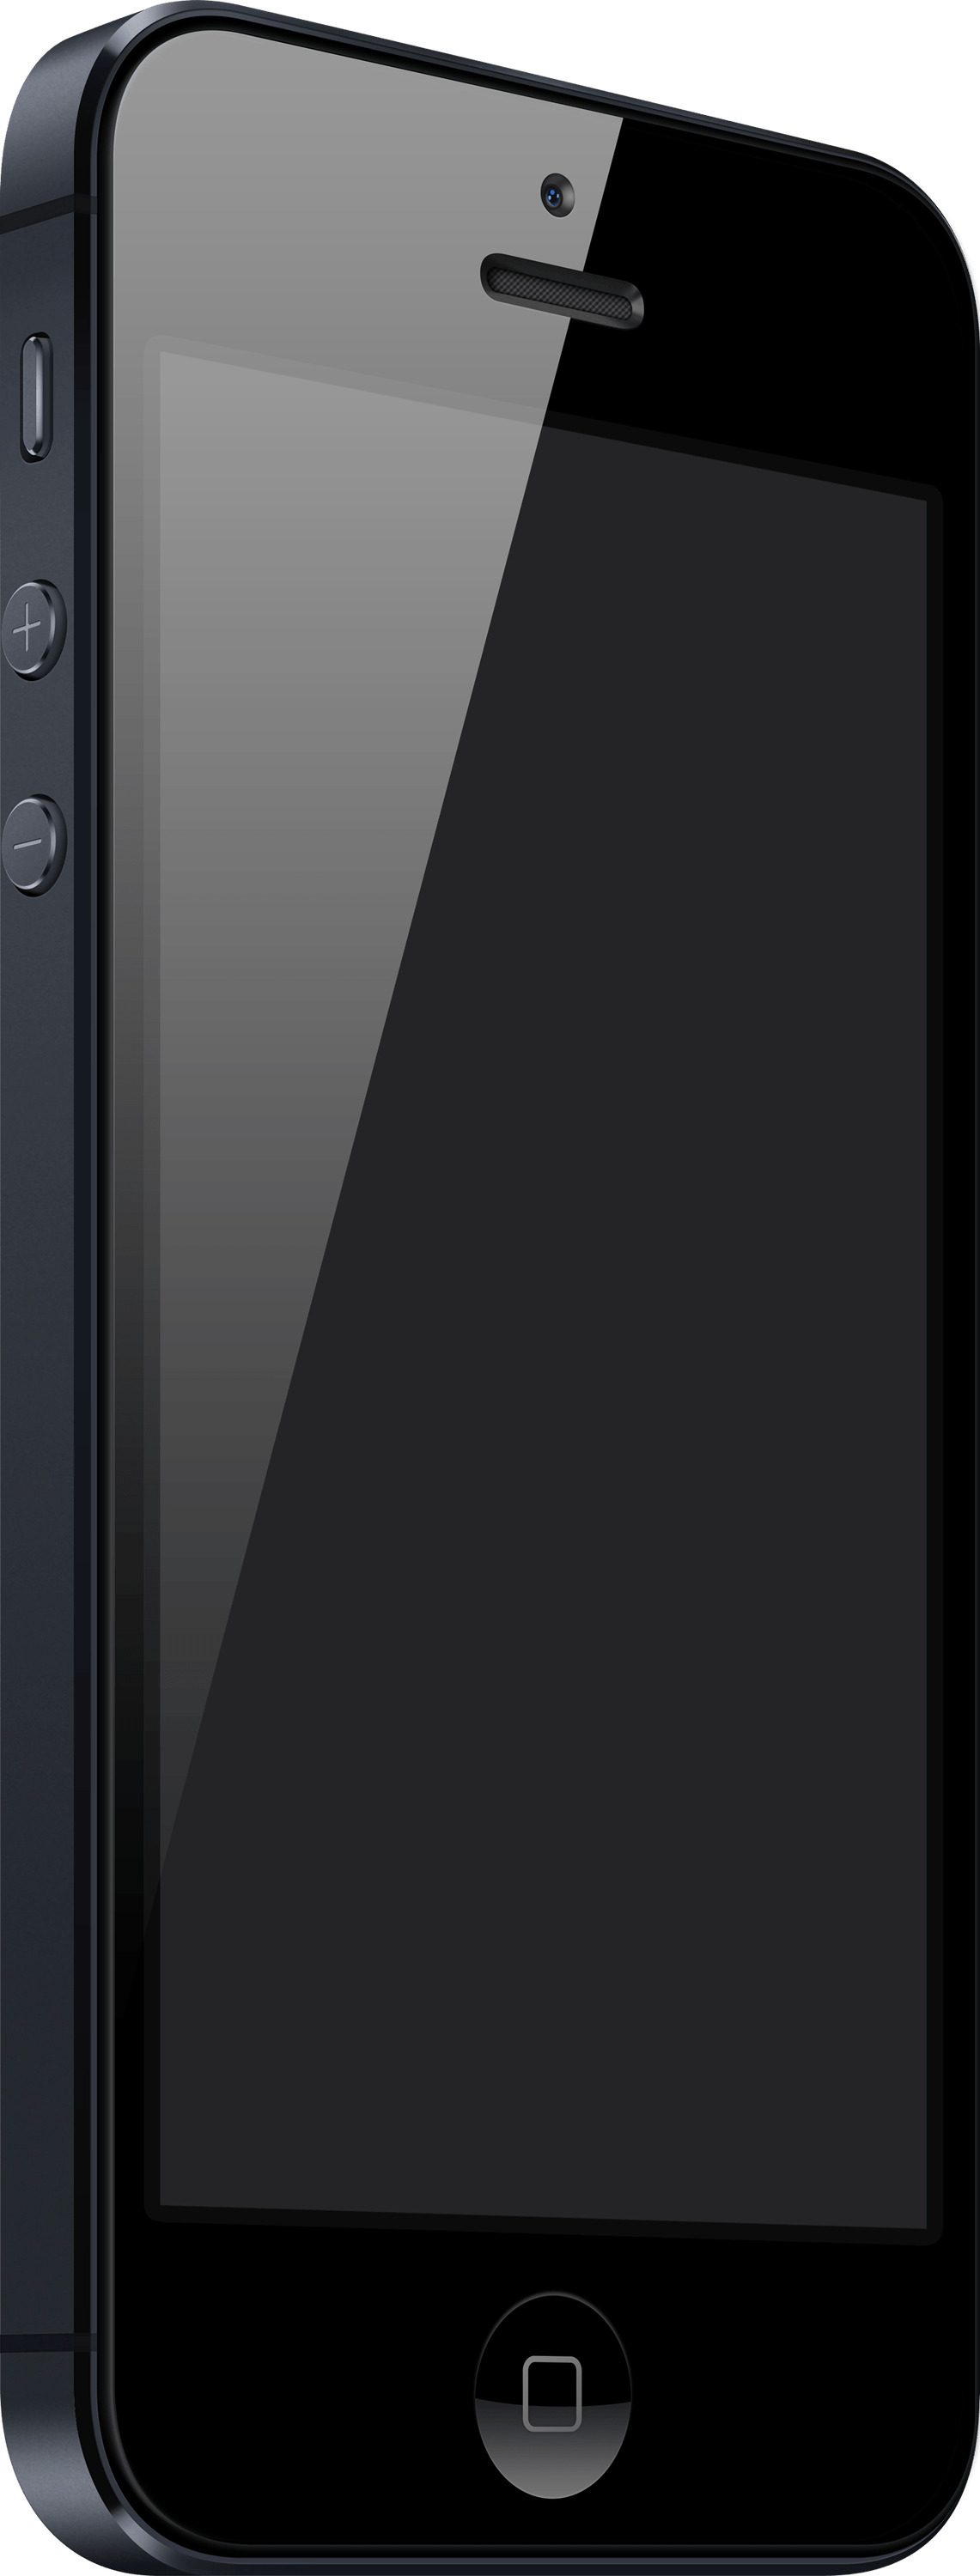 Large Black Iphone icons